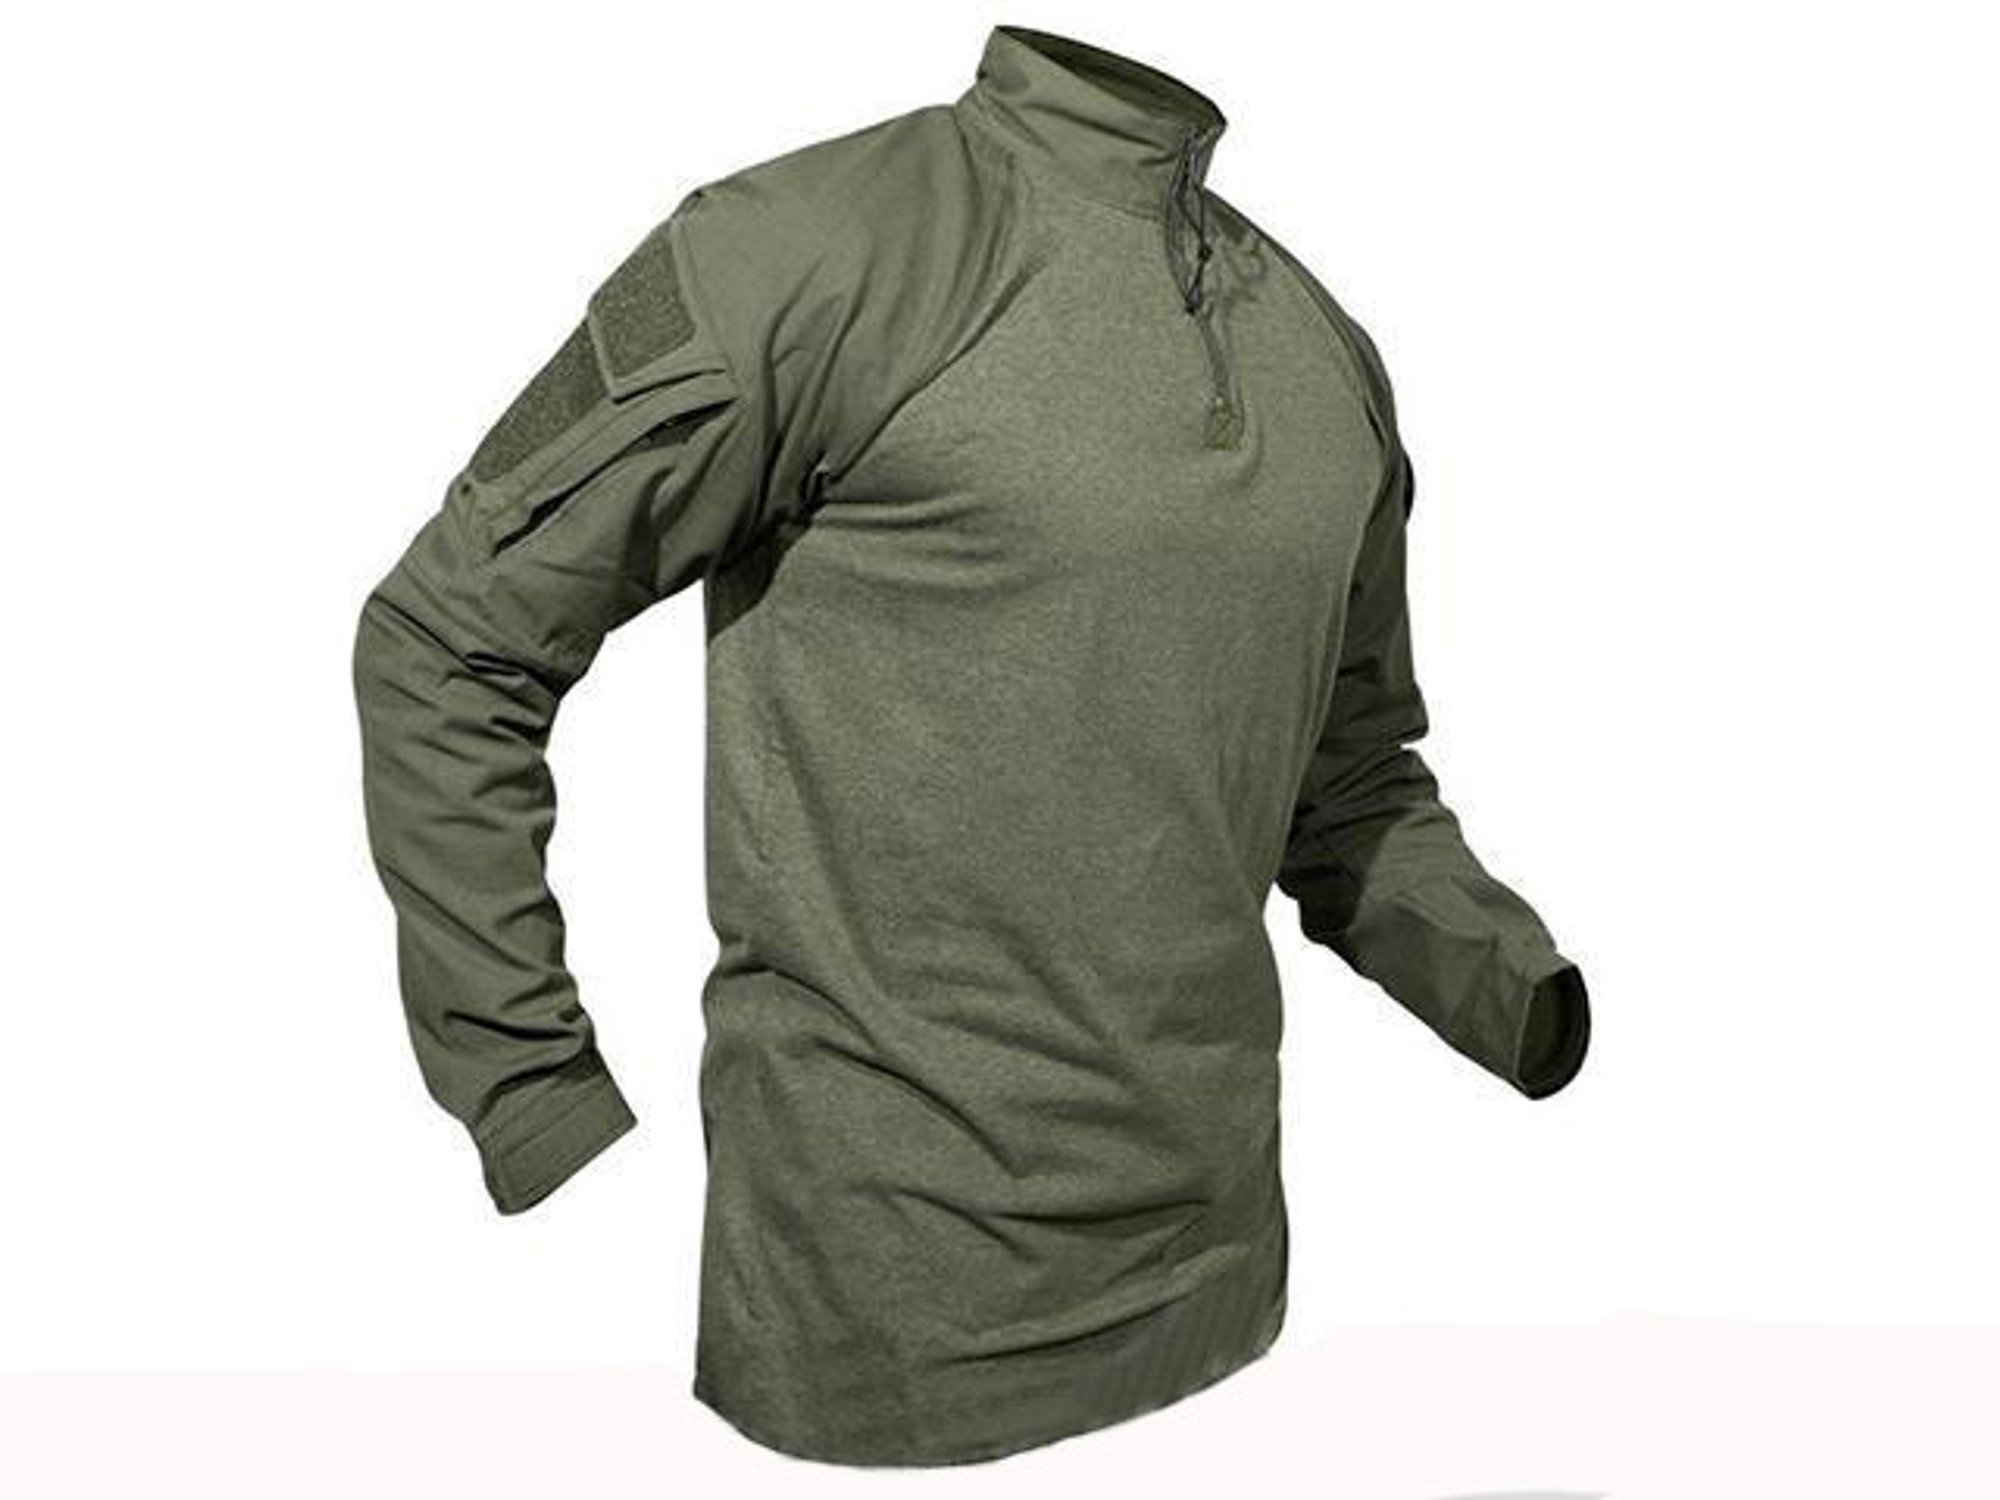 LBX Tactical Camouflage Combat Shirt - Ranger Green (Size: Small)